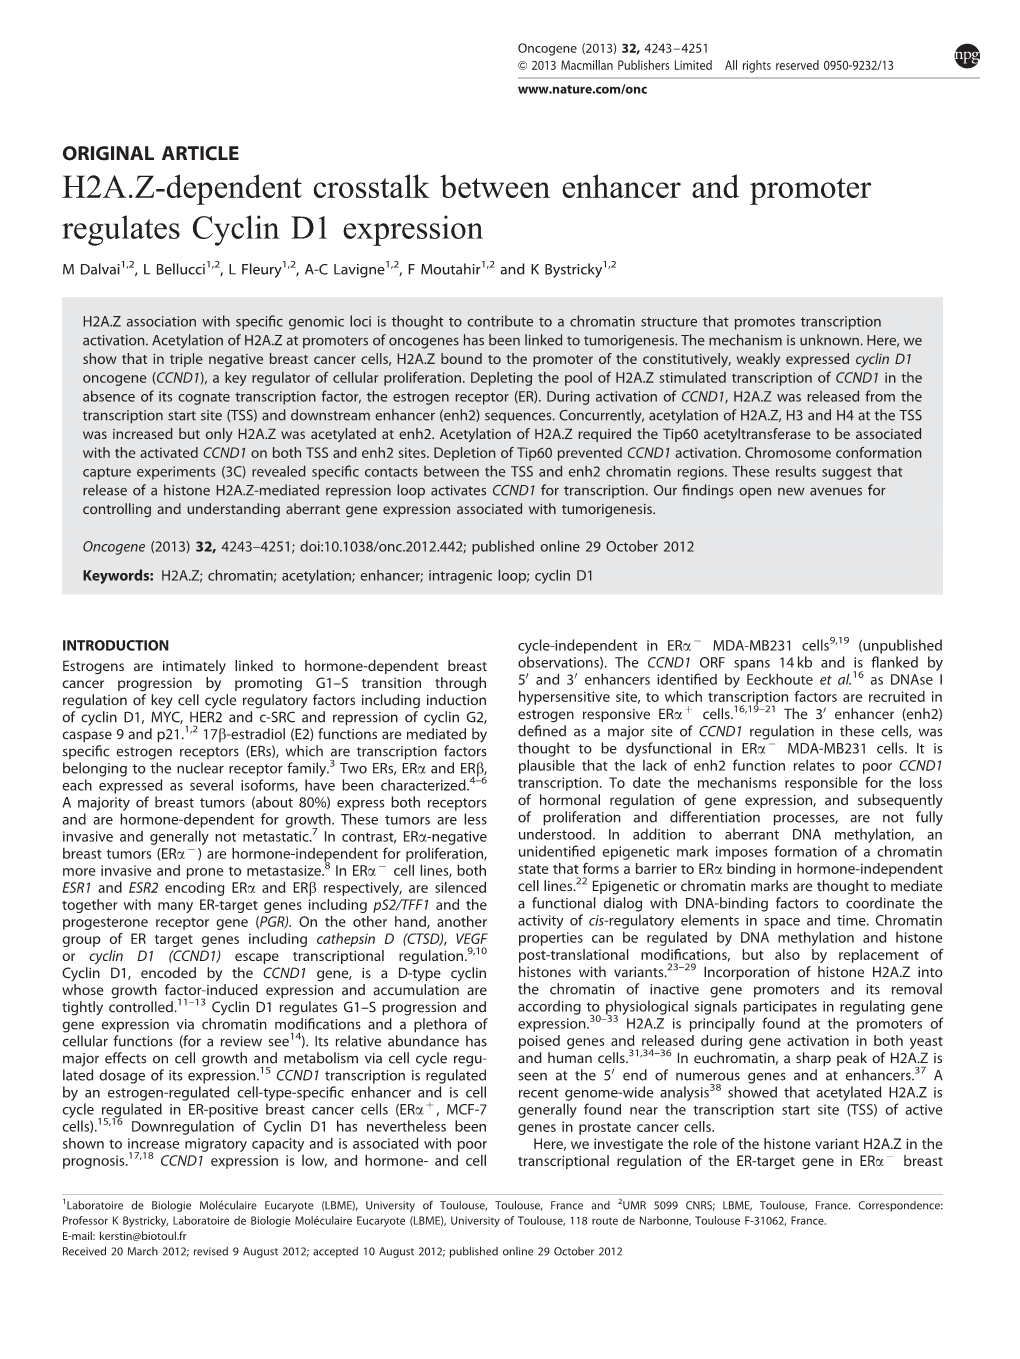 H2A.Z-Dependent Crosstalk Between Enhancer and Promoter Regulates Cyclin D1 Expression